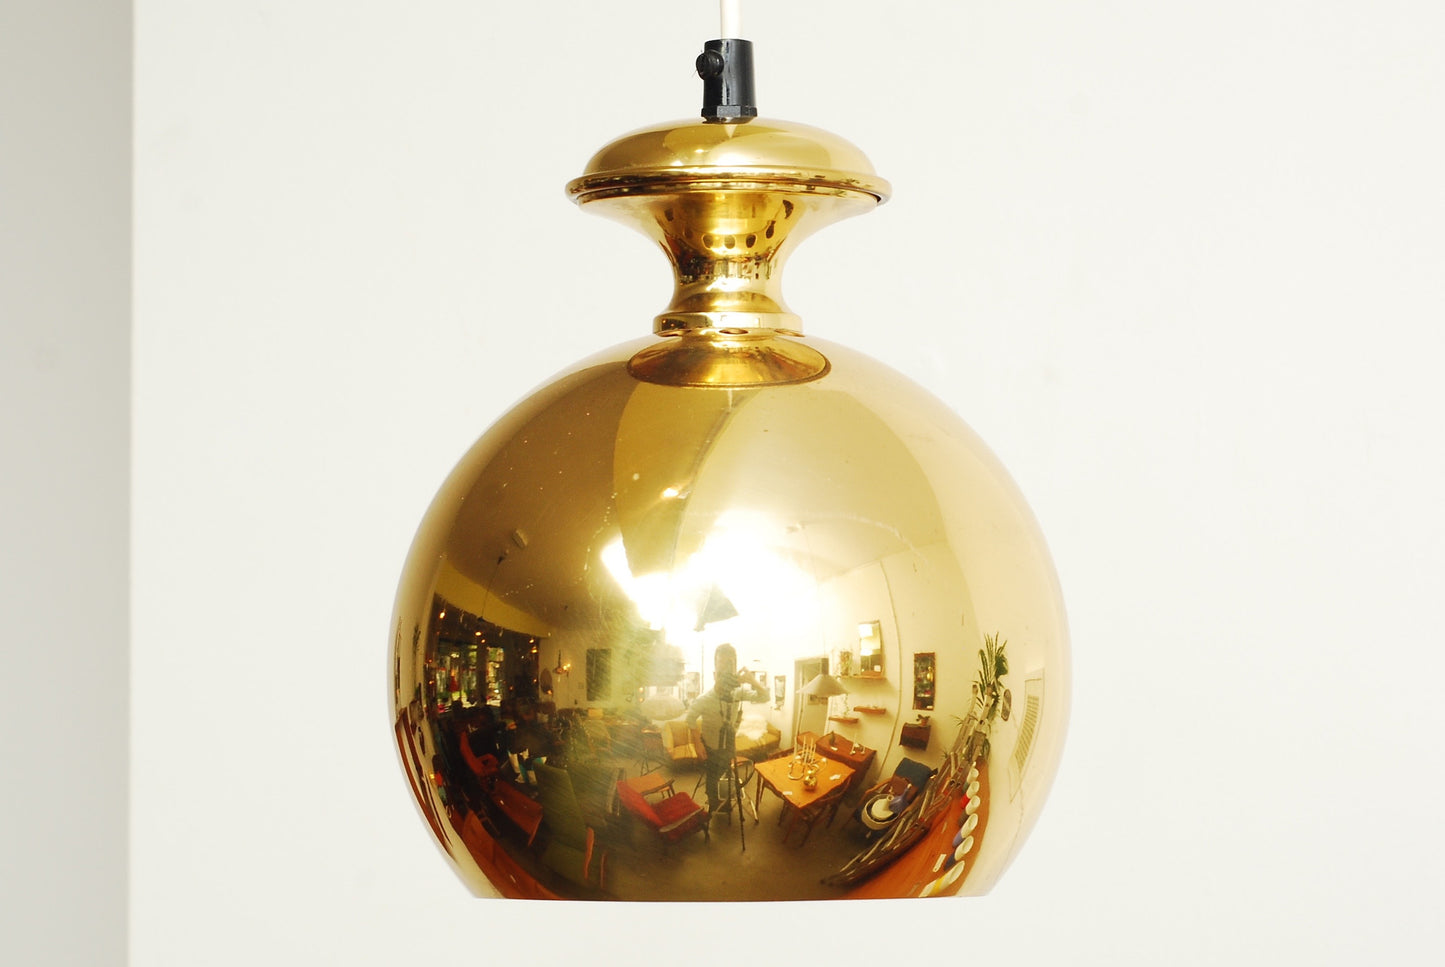 Brass bowl pendant light